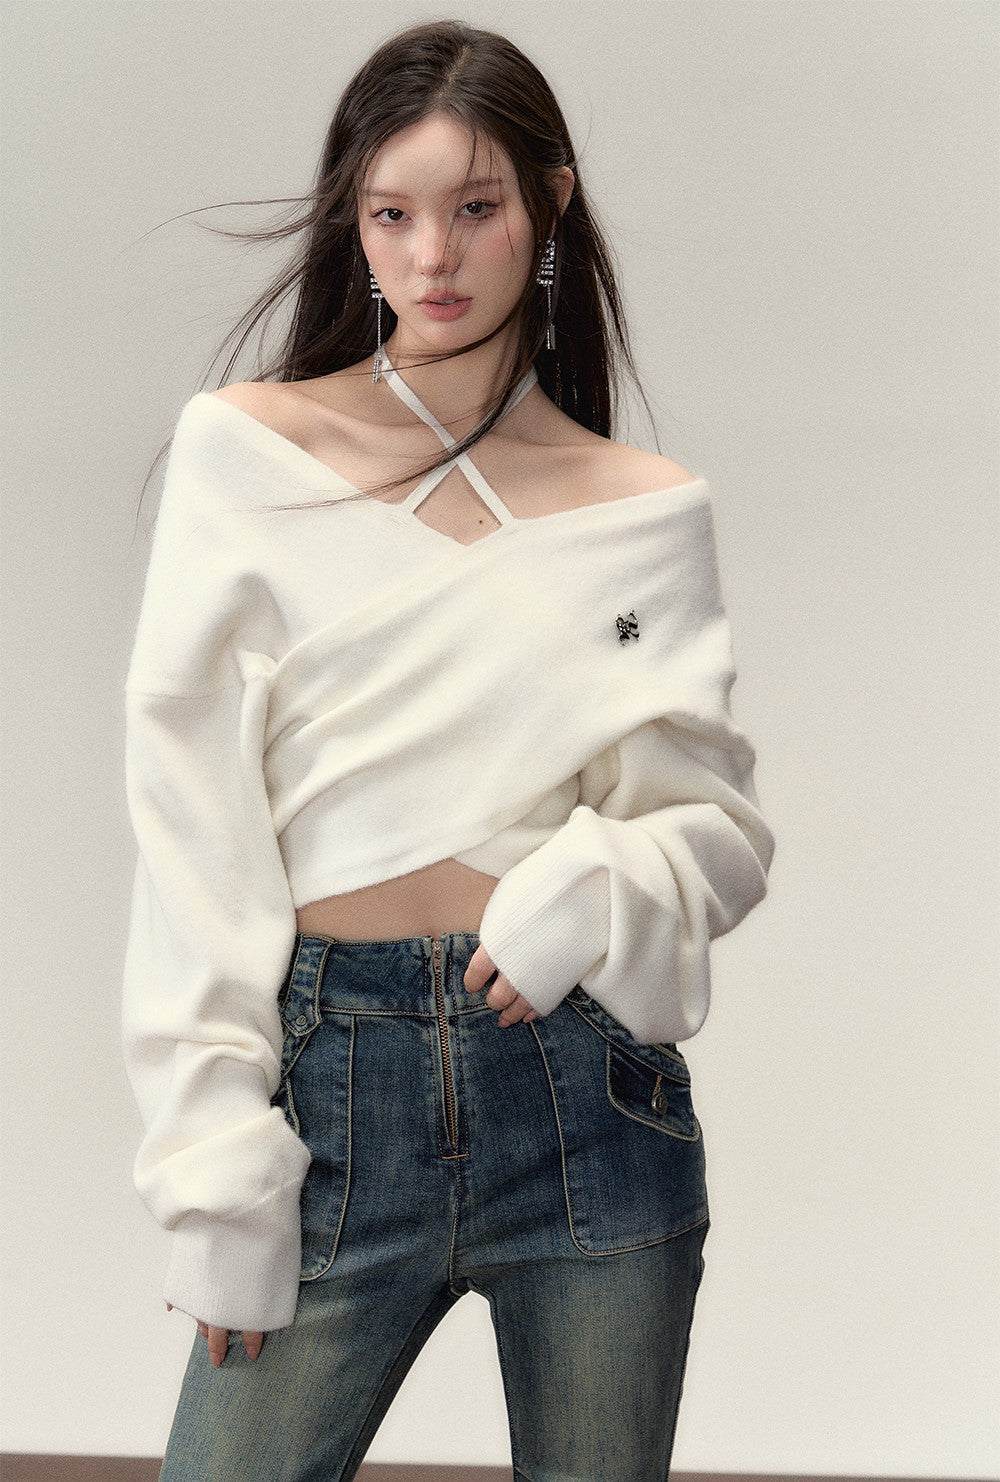 One-shoulder Design Clavicle Sweater VIA0036